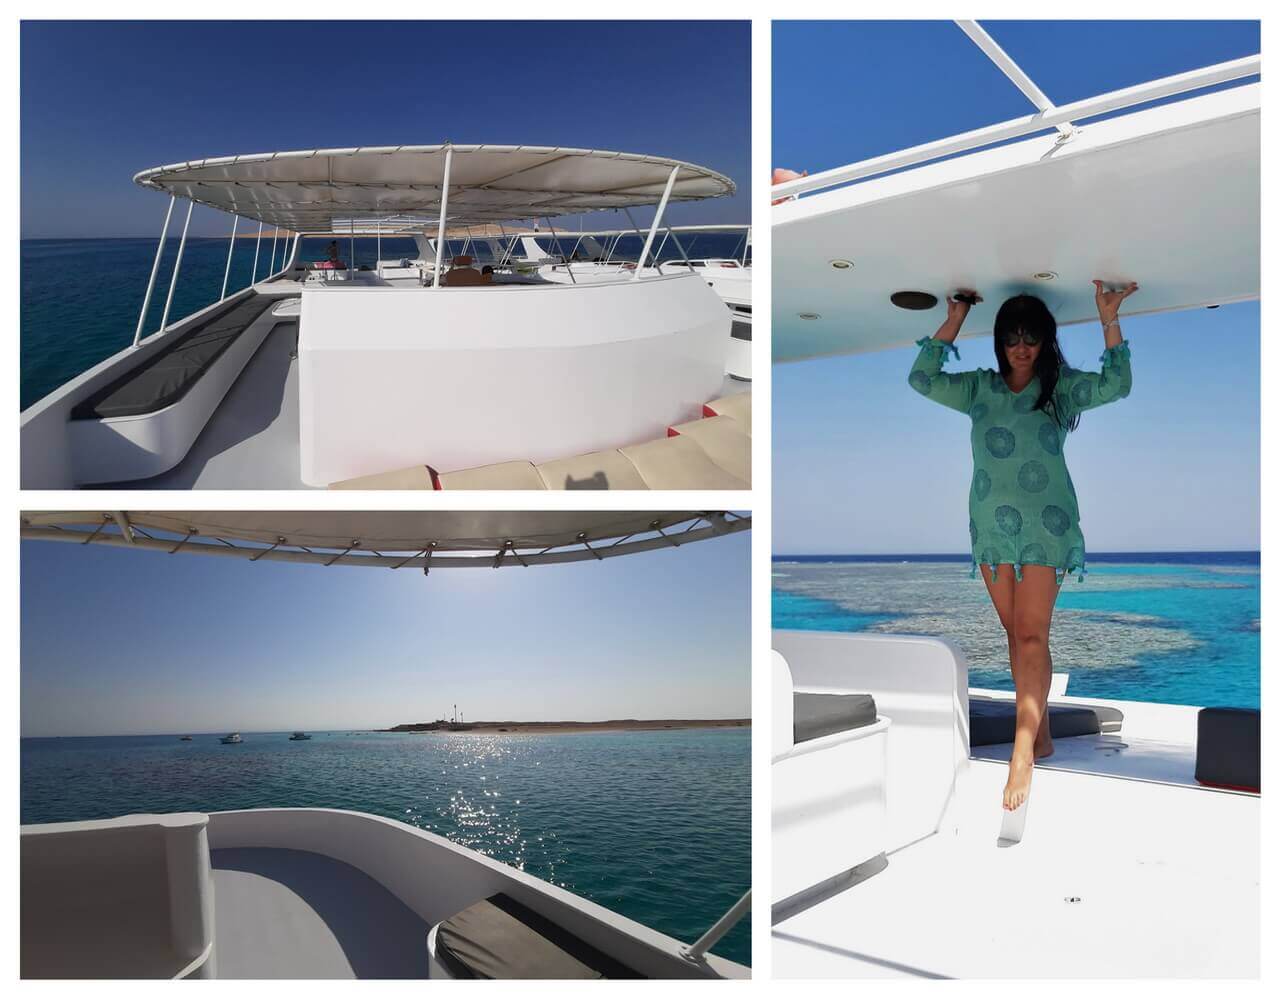 Excursion boat, Hurghada